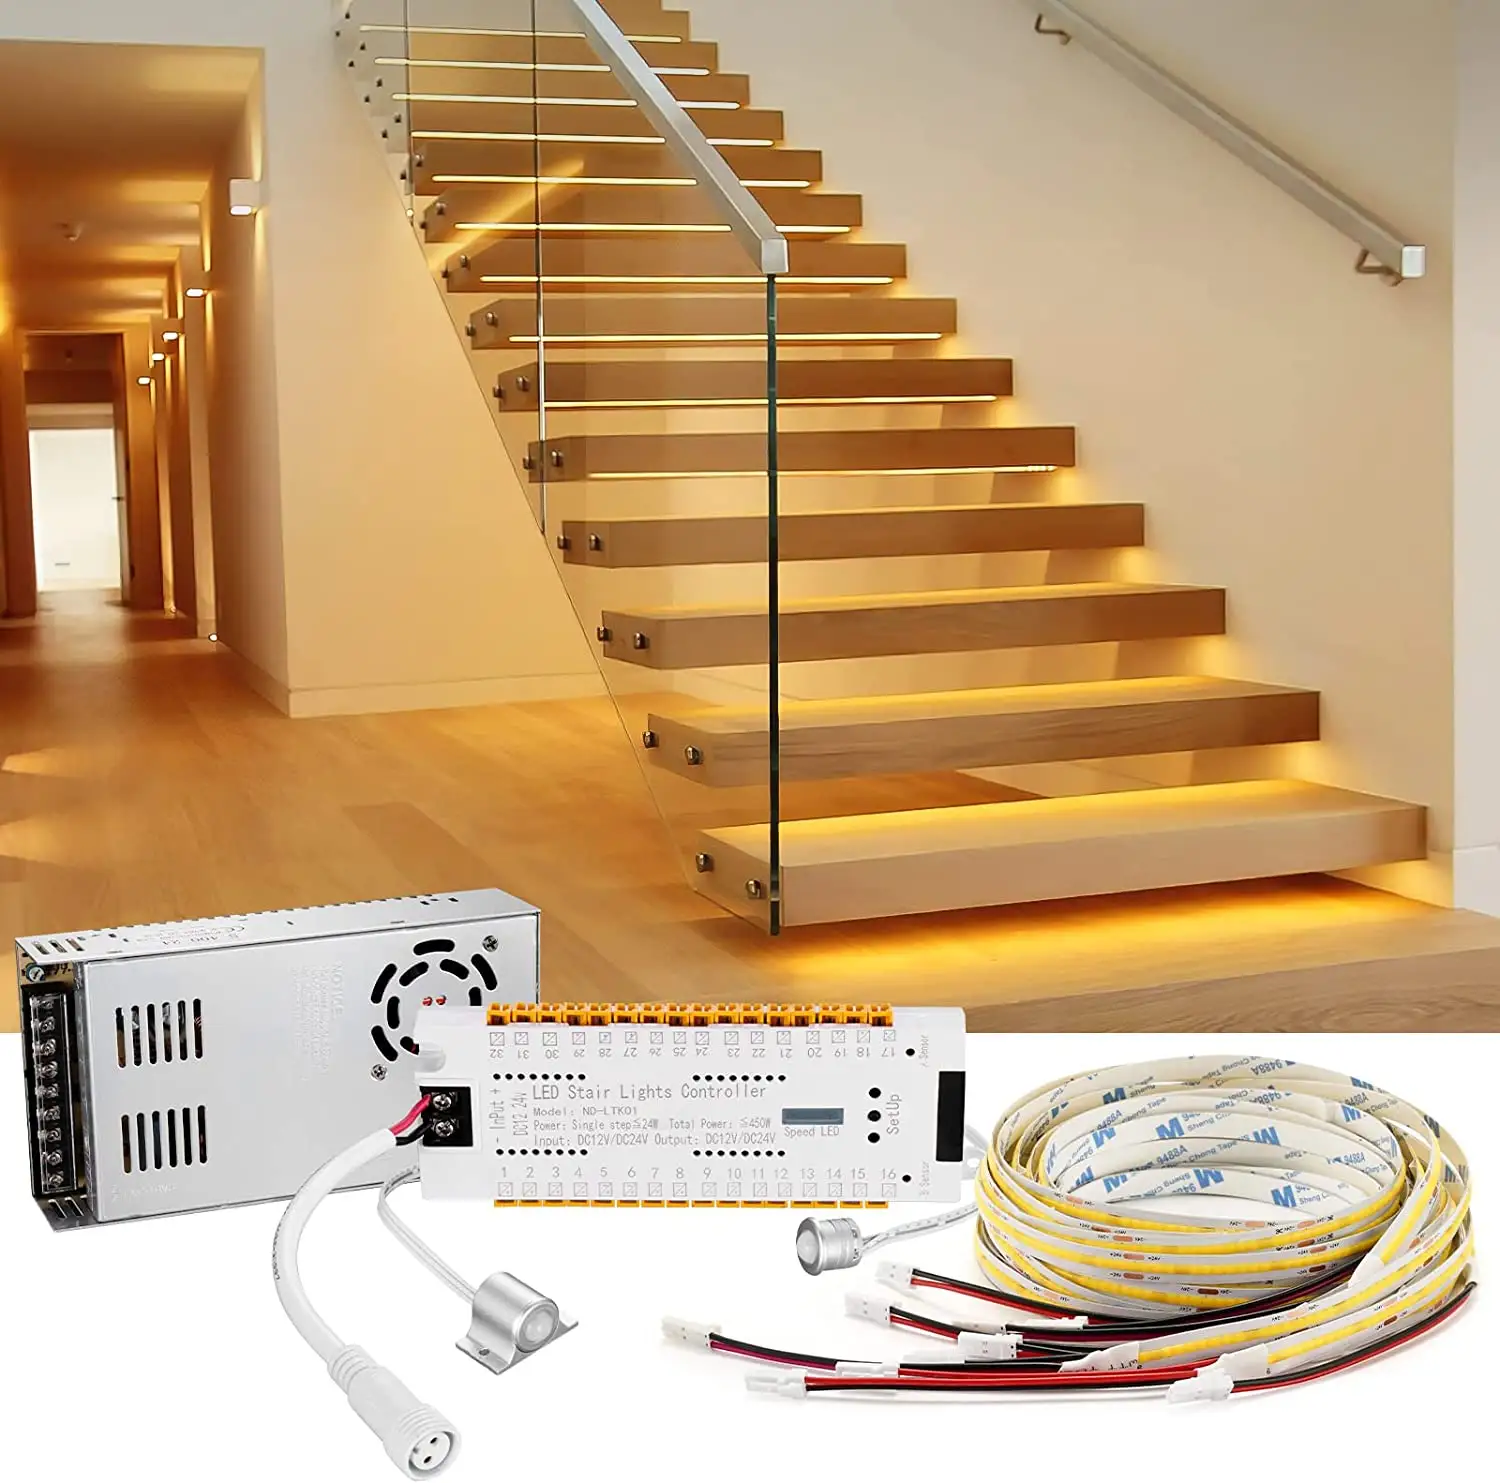 OEM Intelligent Motion Sensor LED Treppen beleuchtung Controller Kit Schneid bare COB-Streifen Indoor Step Treppen beleuchtung Treppen licht